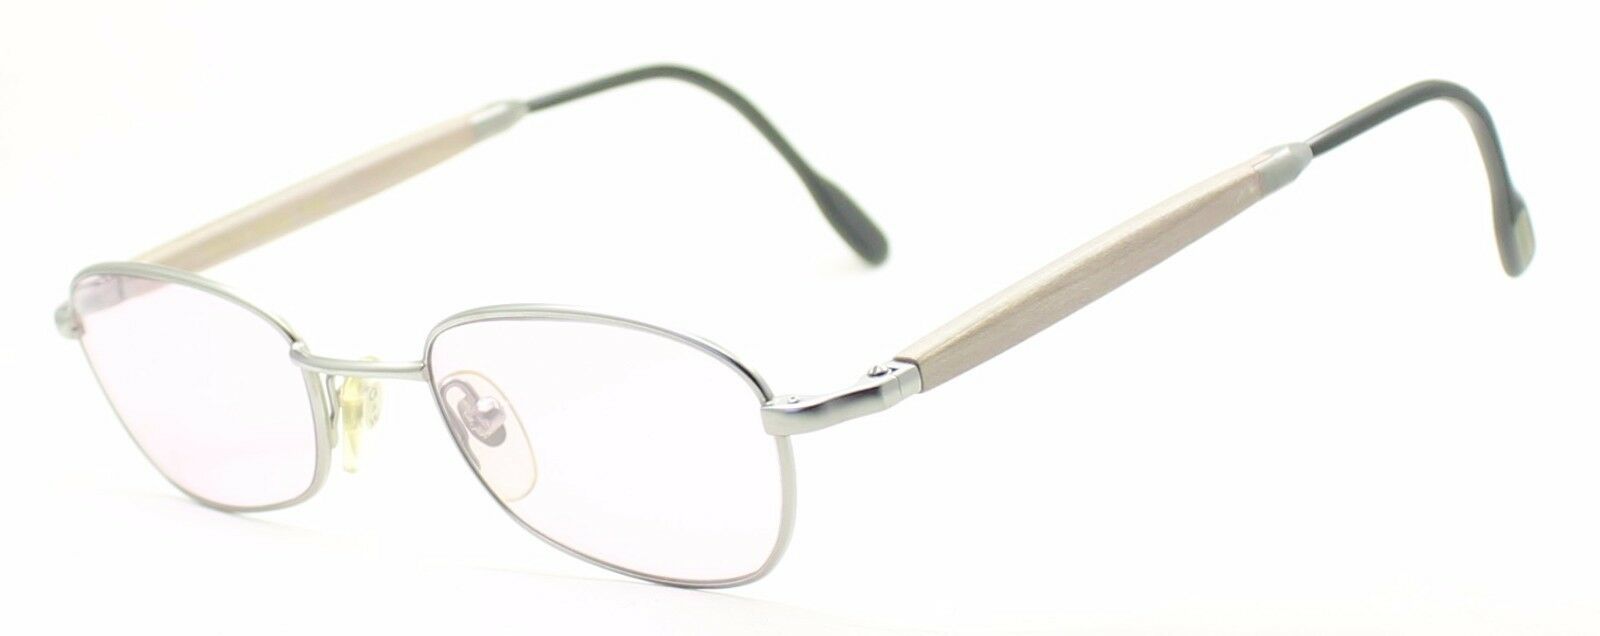 GOLD & WOOD PARIS 373.9 Purple Eyewear FRAMES Eyeglasses RX Optical Glasses -New